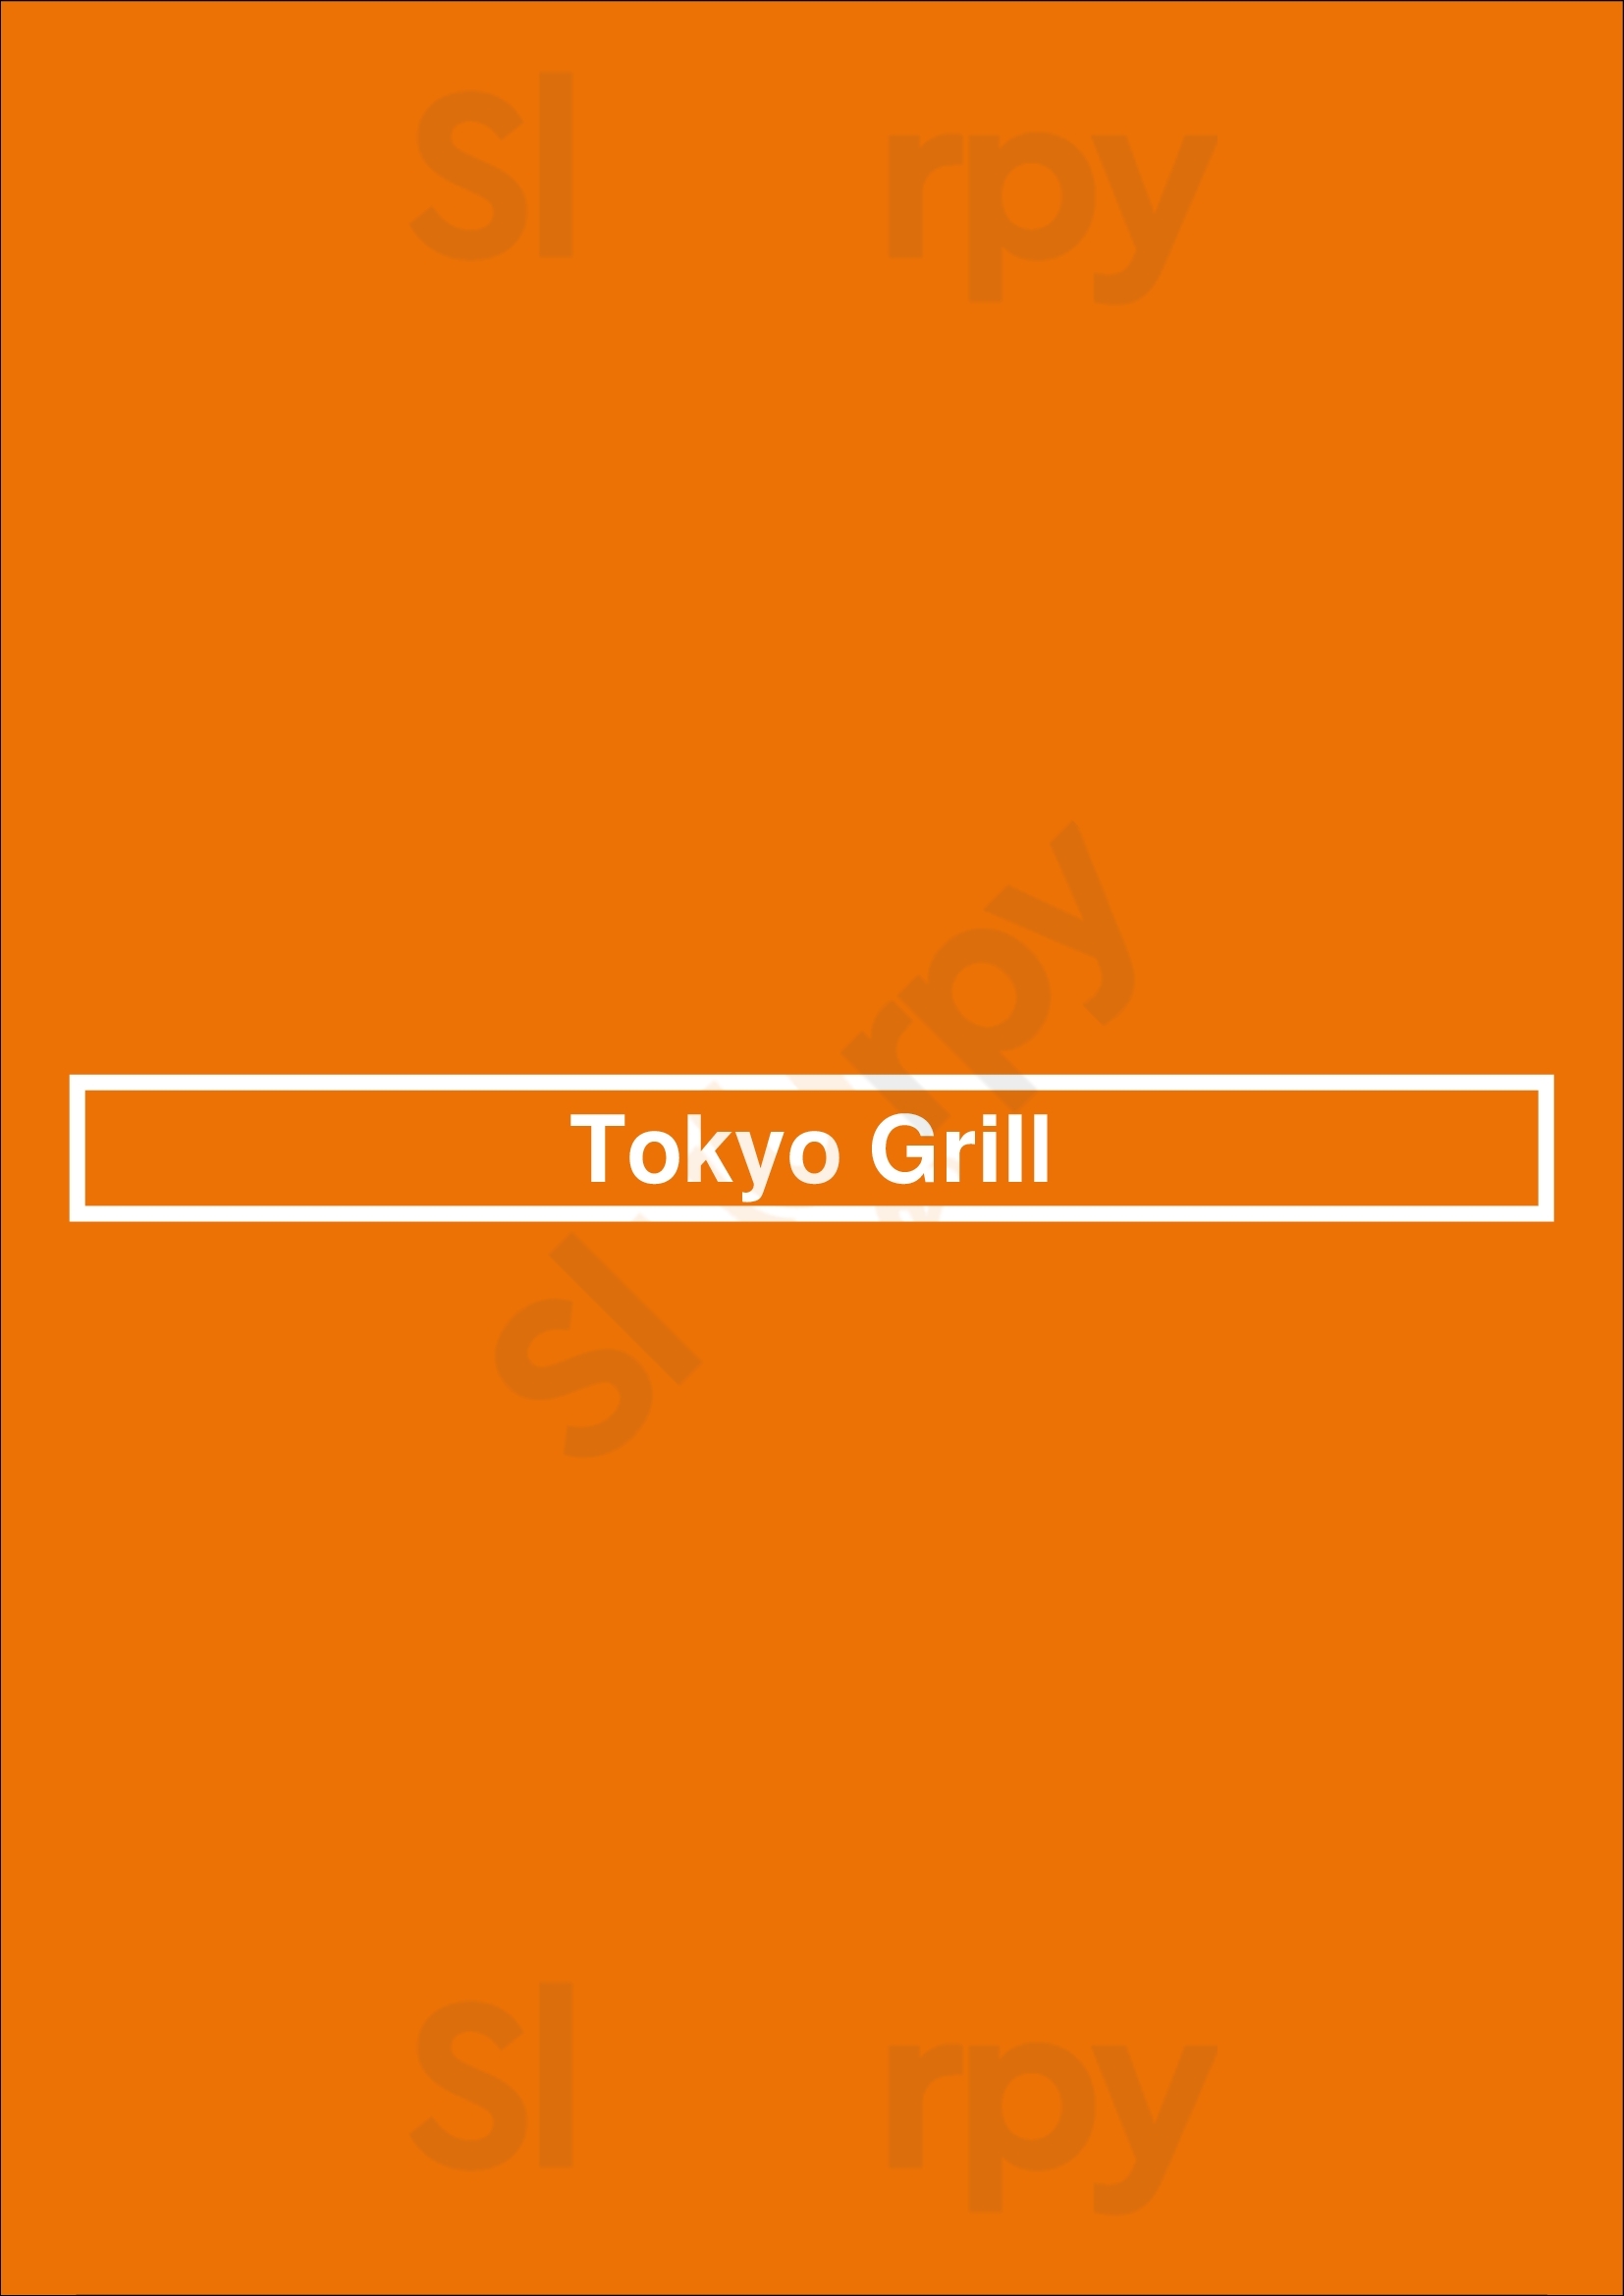 Tokyo Grill Memphis Menu - 1